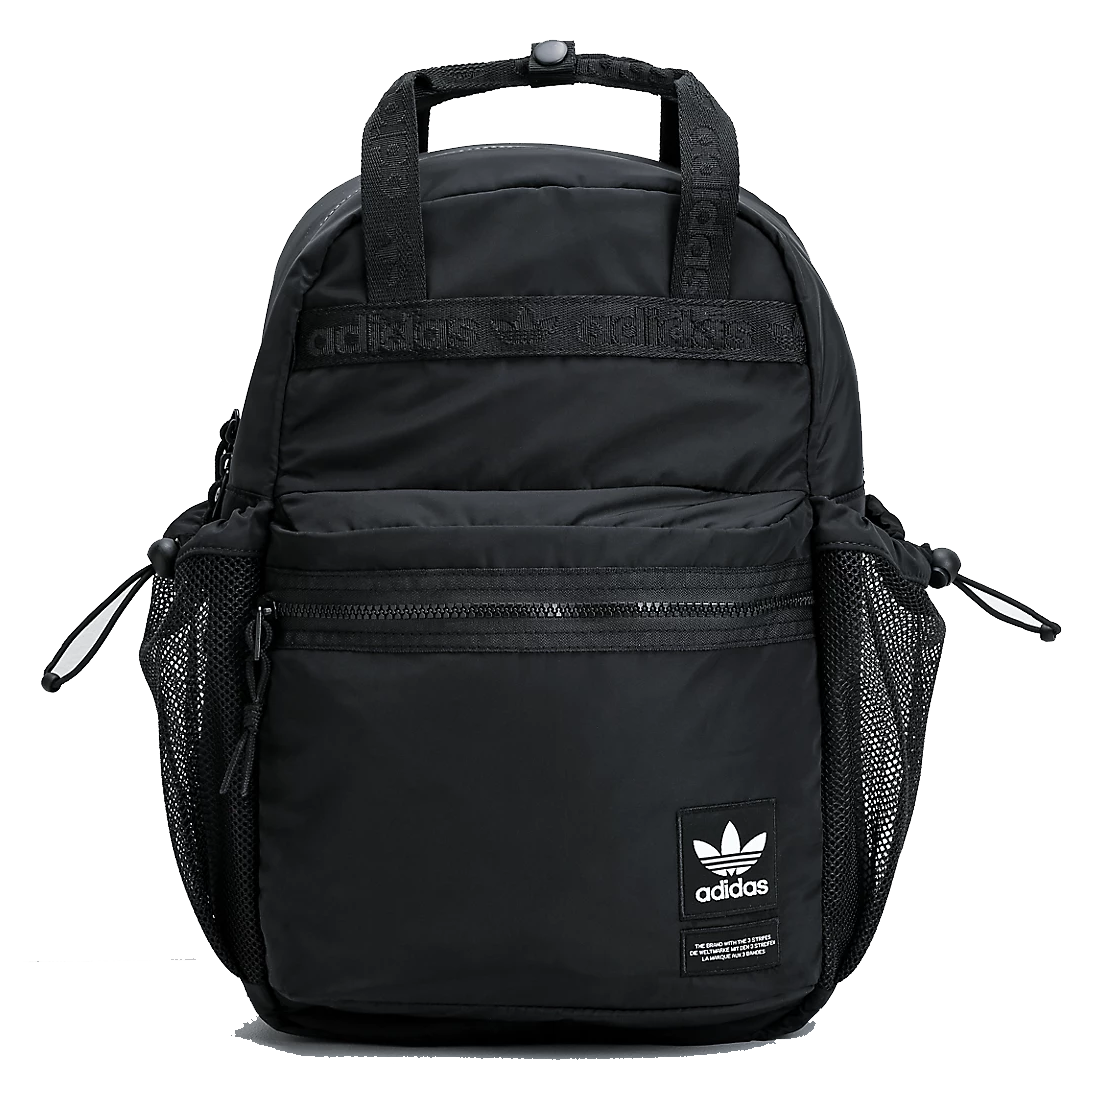 Adidas Originals Middie Backpack Front View